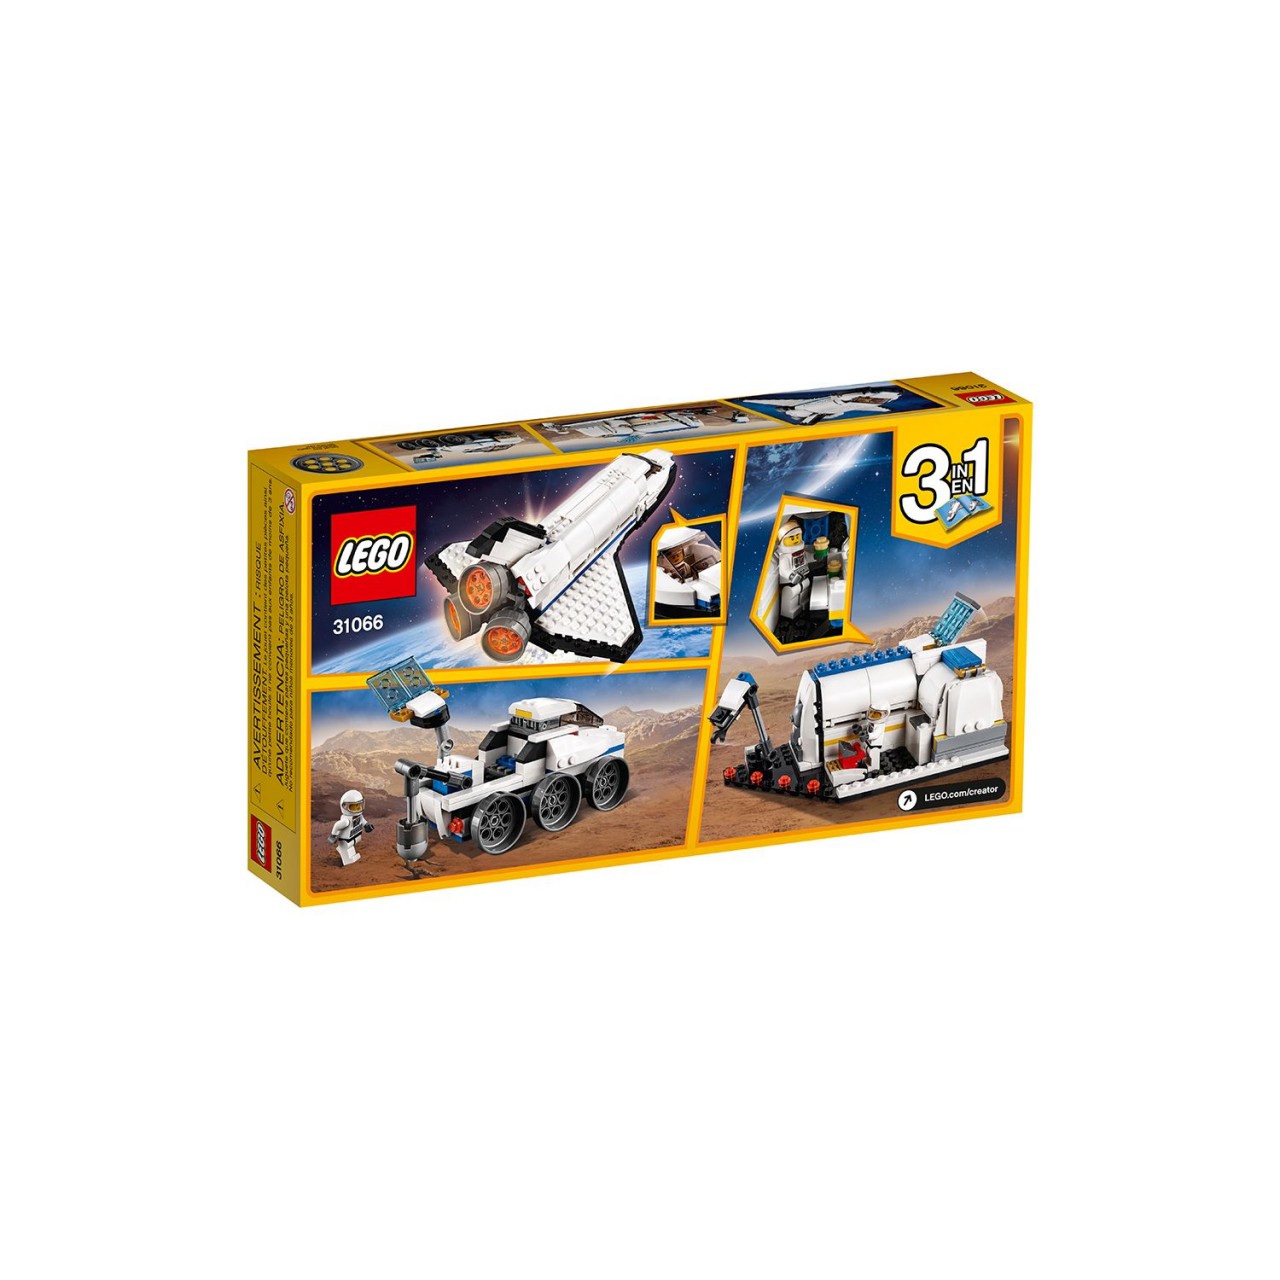 LEGO CREATOR 31066 Forschungs-Spaceshuttle